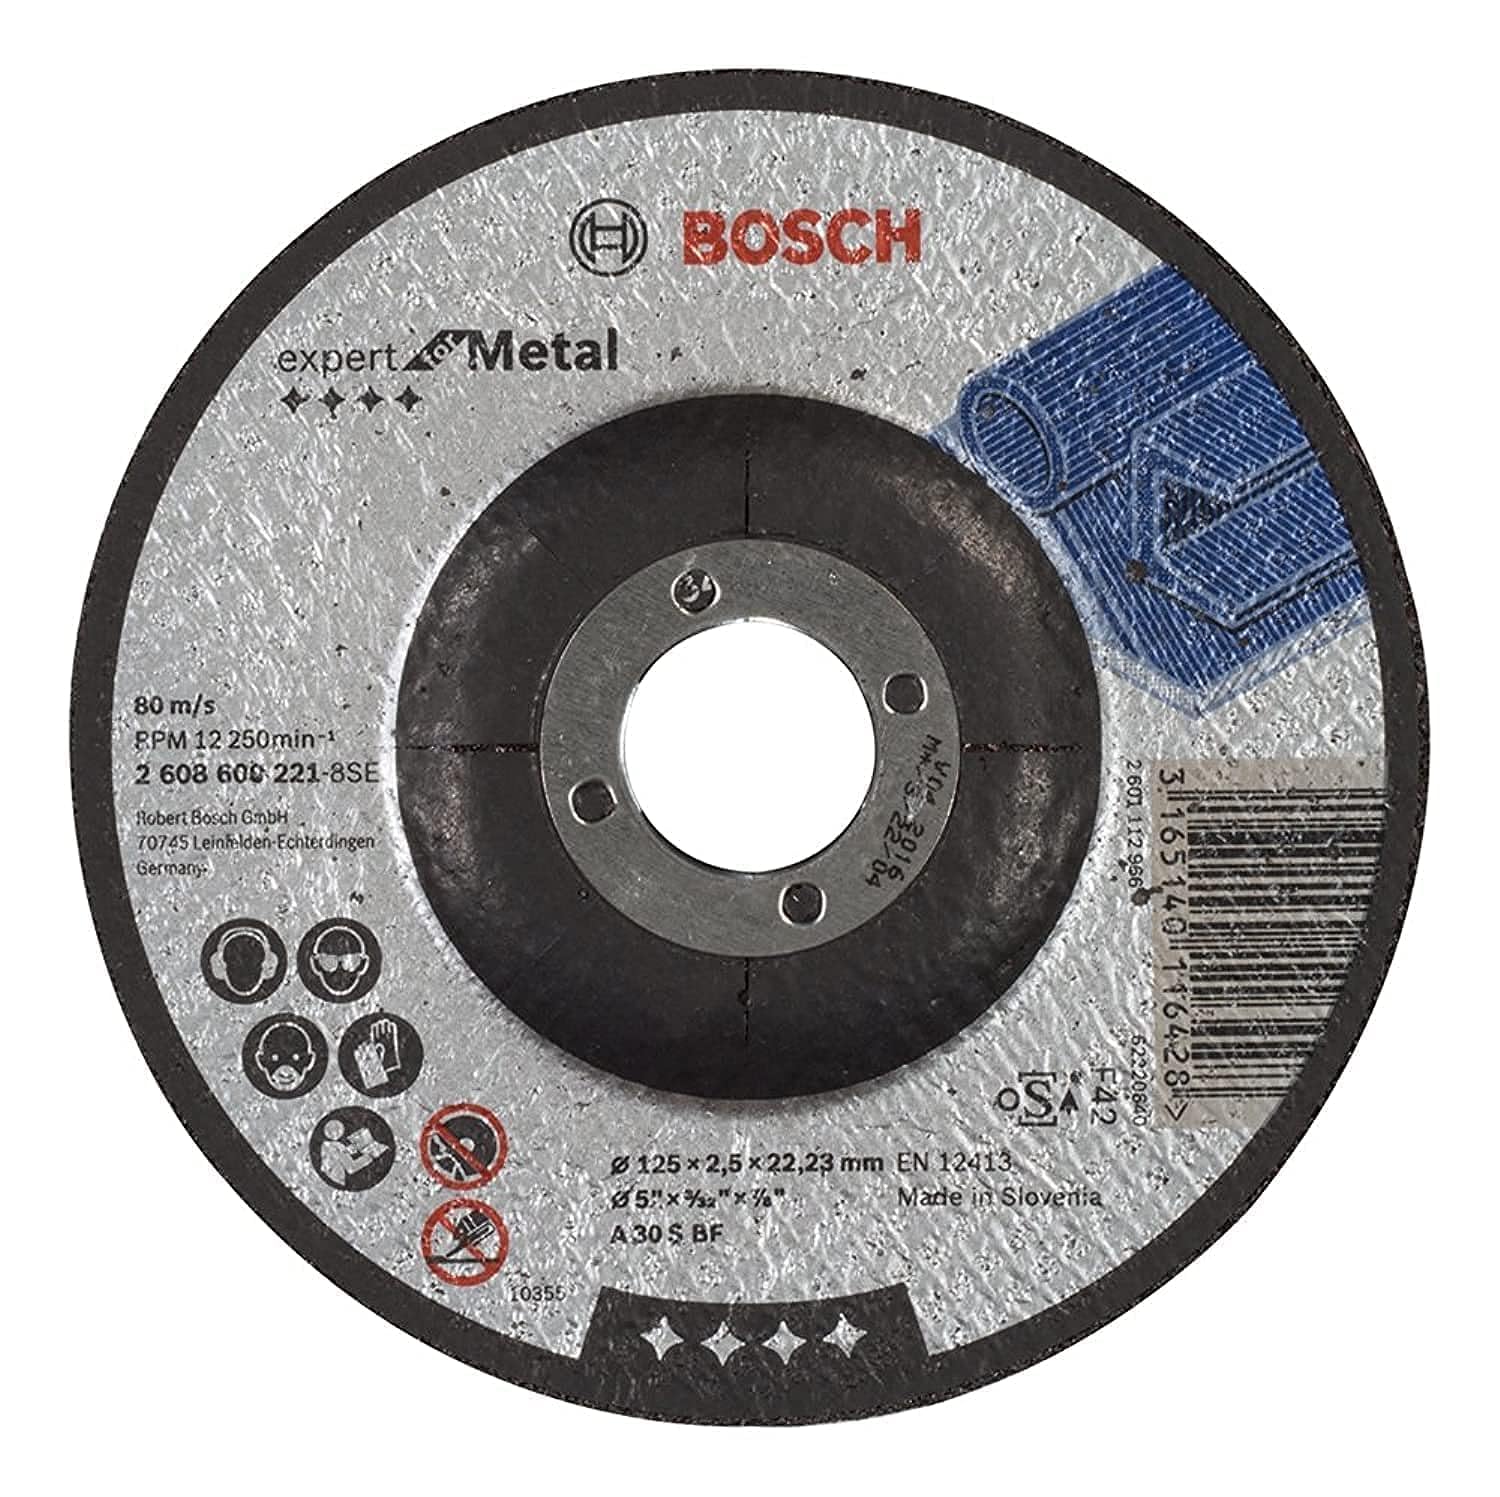 Bosch Dpc Metal Cutting Disc 125X22 2608600221 Power Tool Services